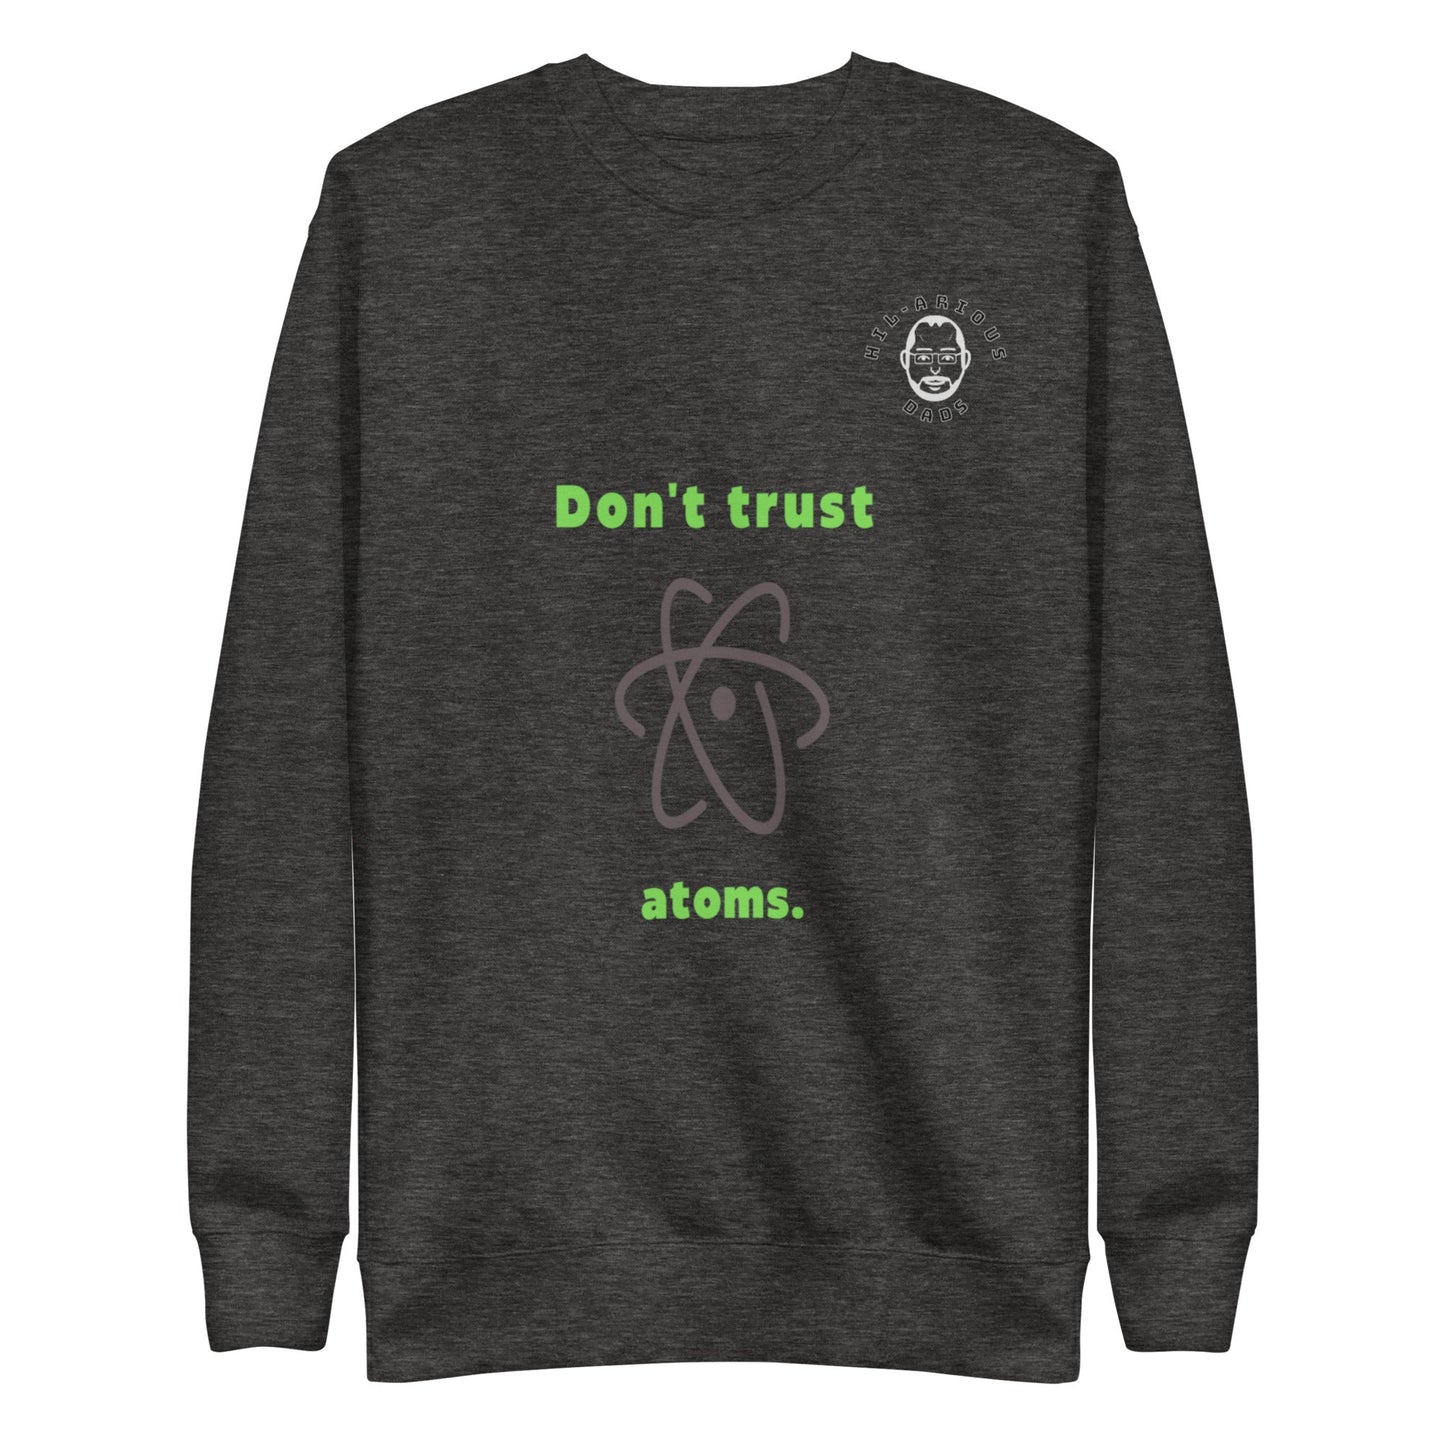 Don't trust atoms-Sweatshirt - Hil-arious Dads